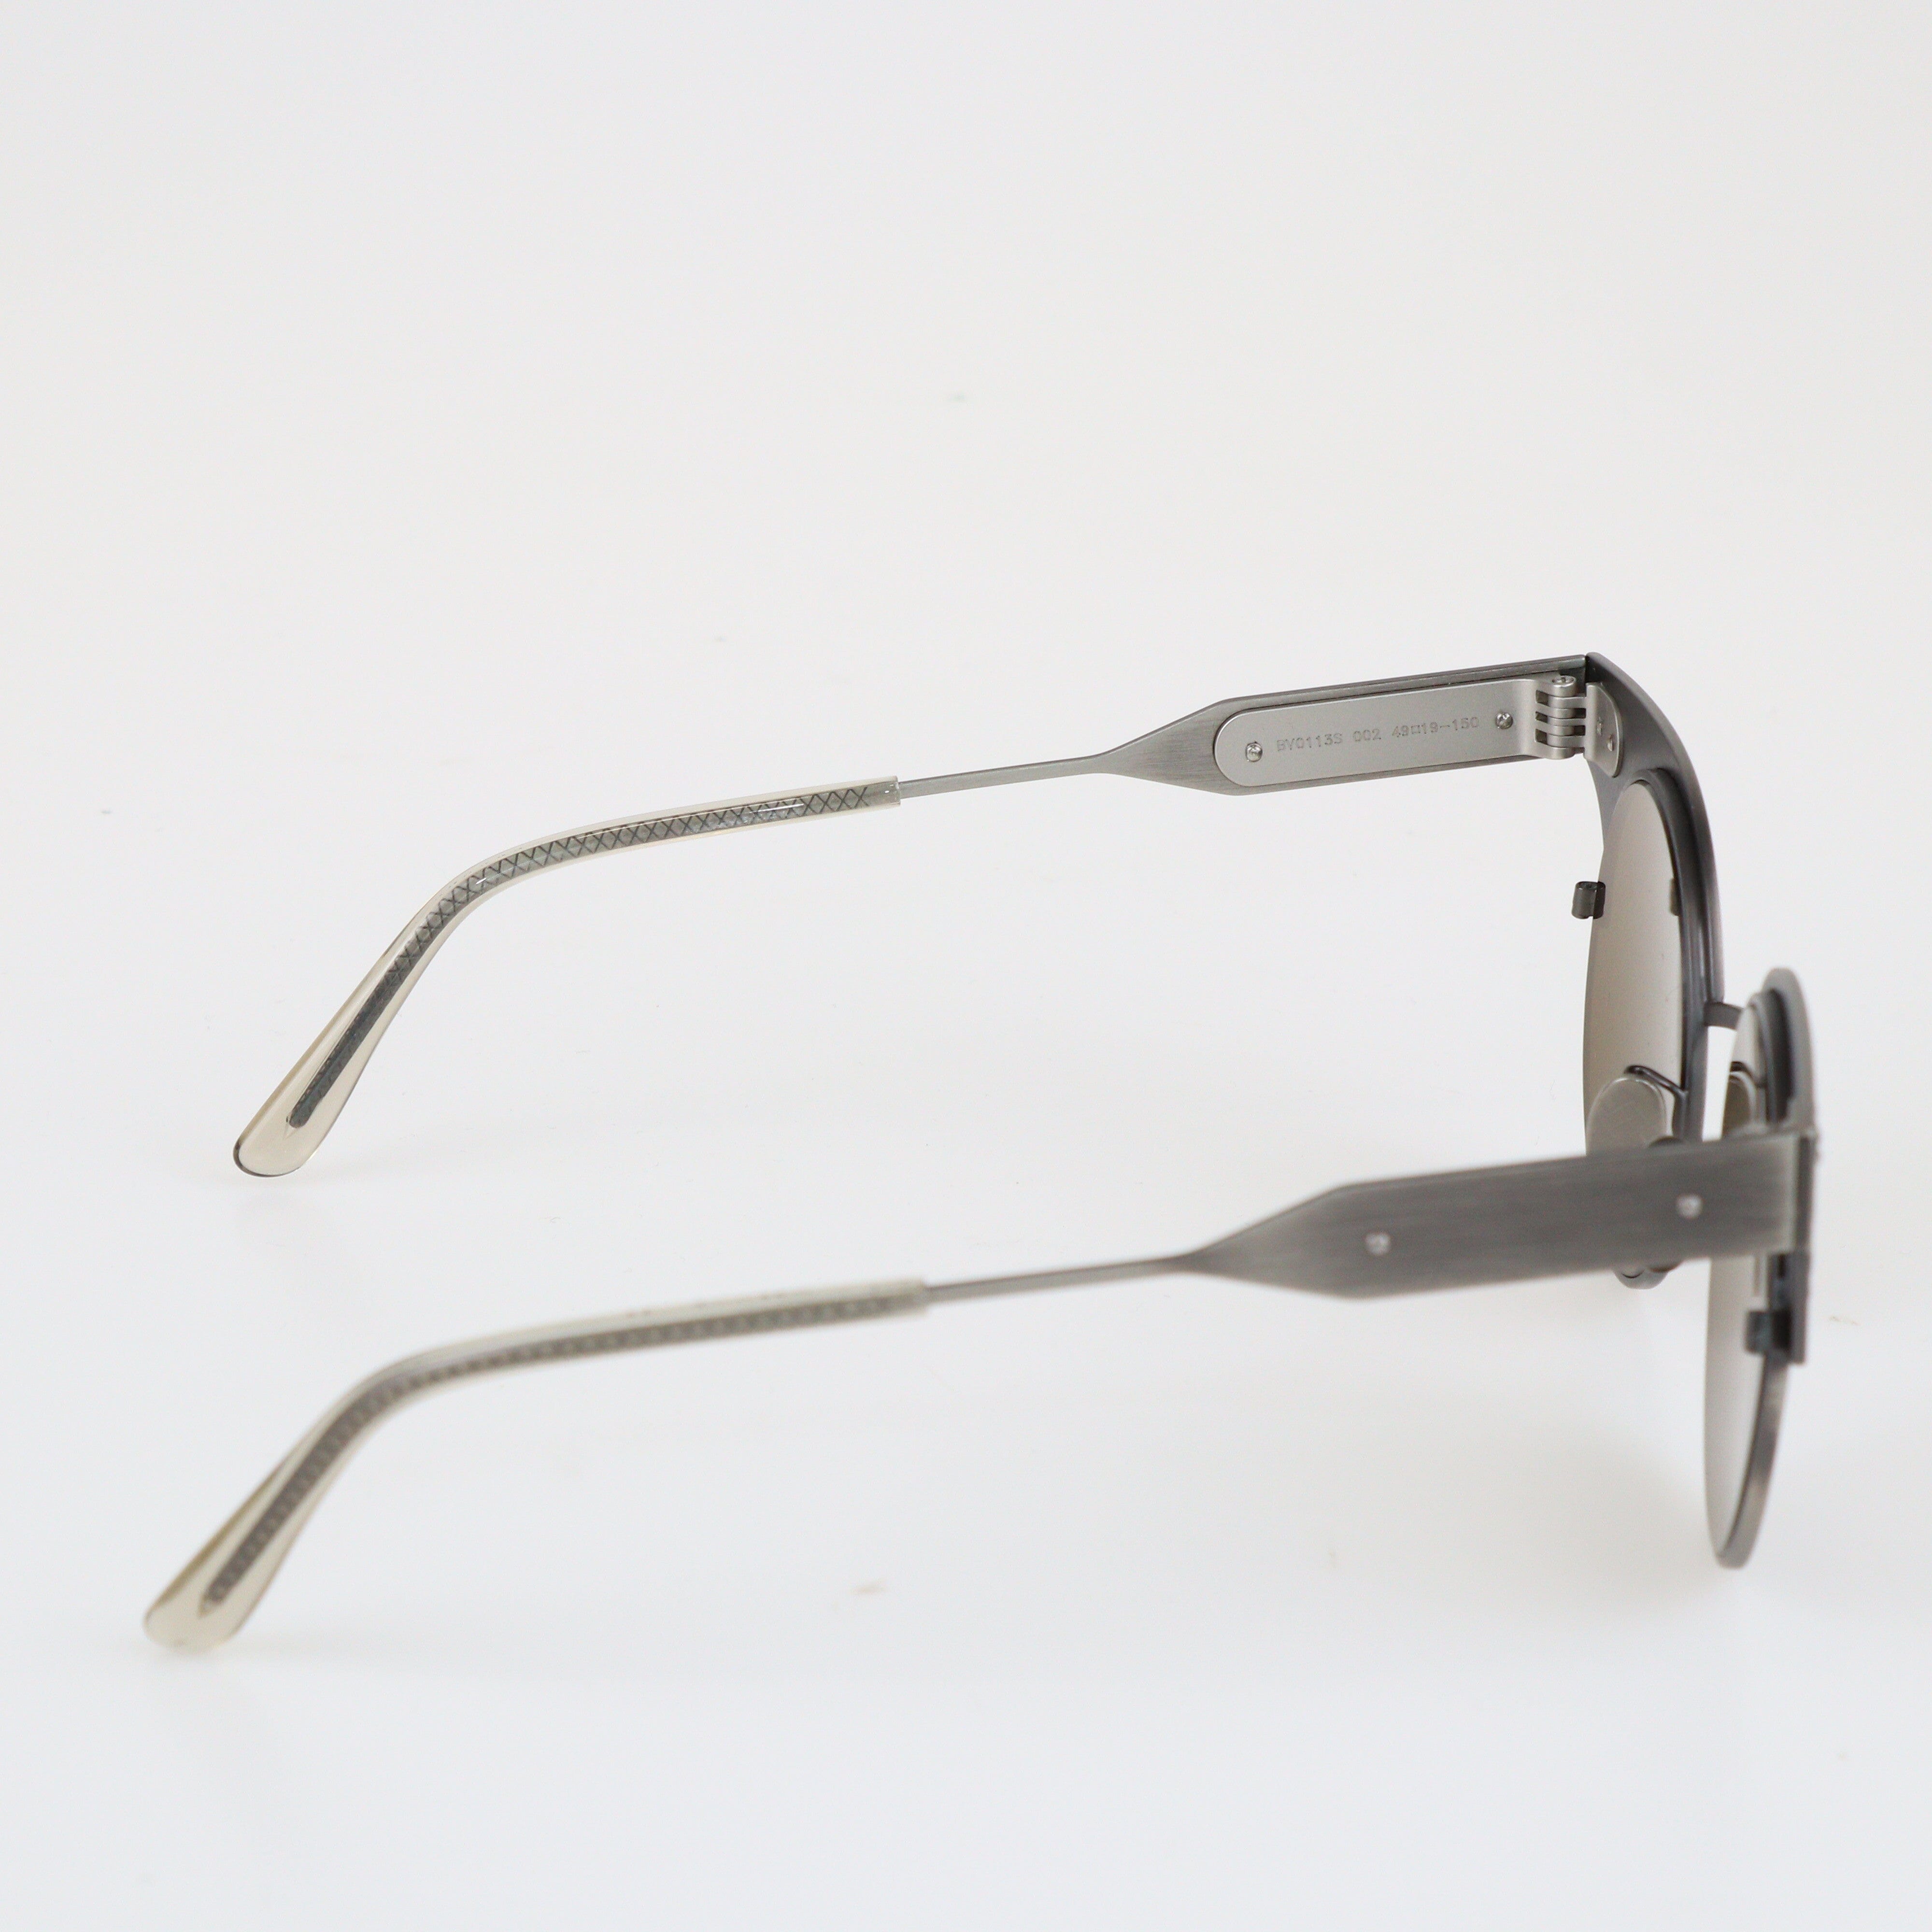 Grey/Brown BV0113S Round Sunglasses Accessories Bottega Veneta 